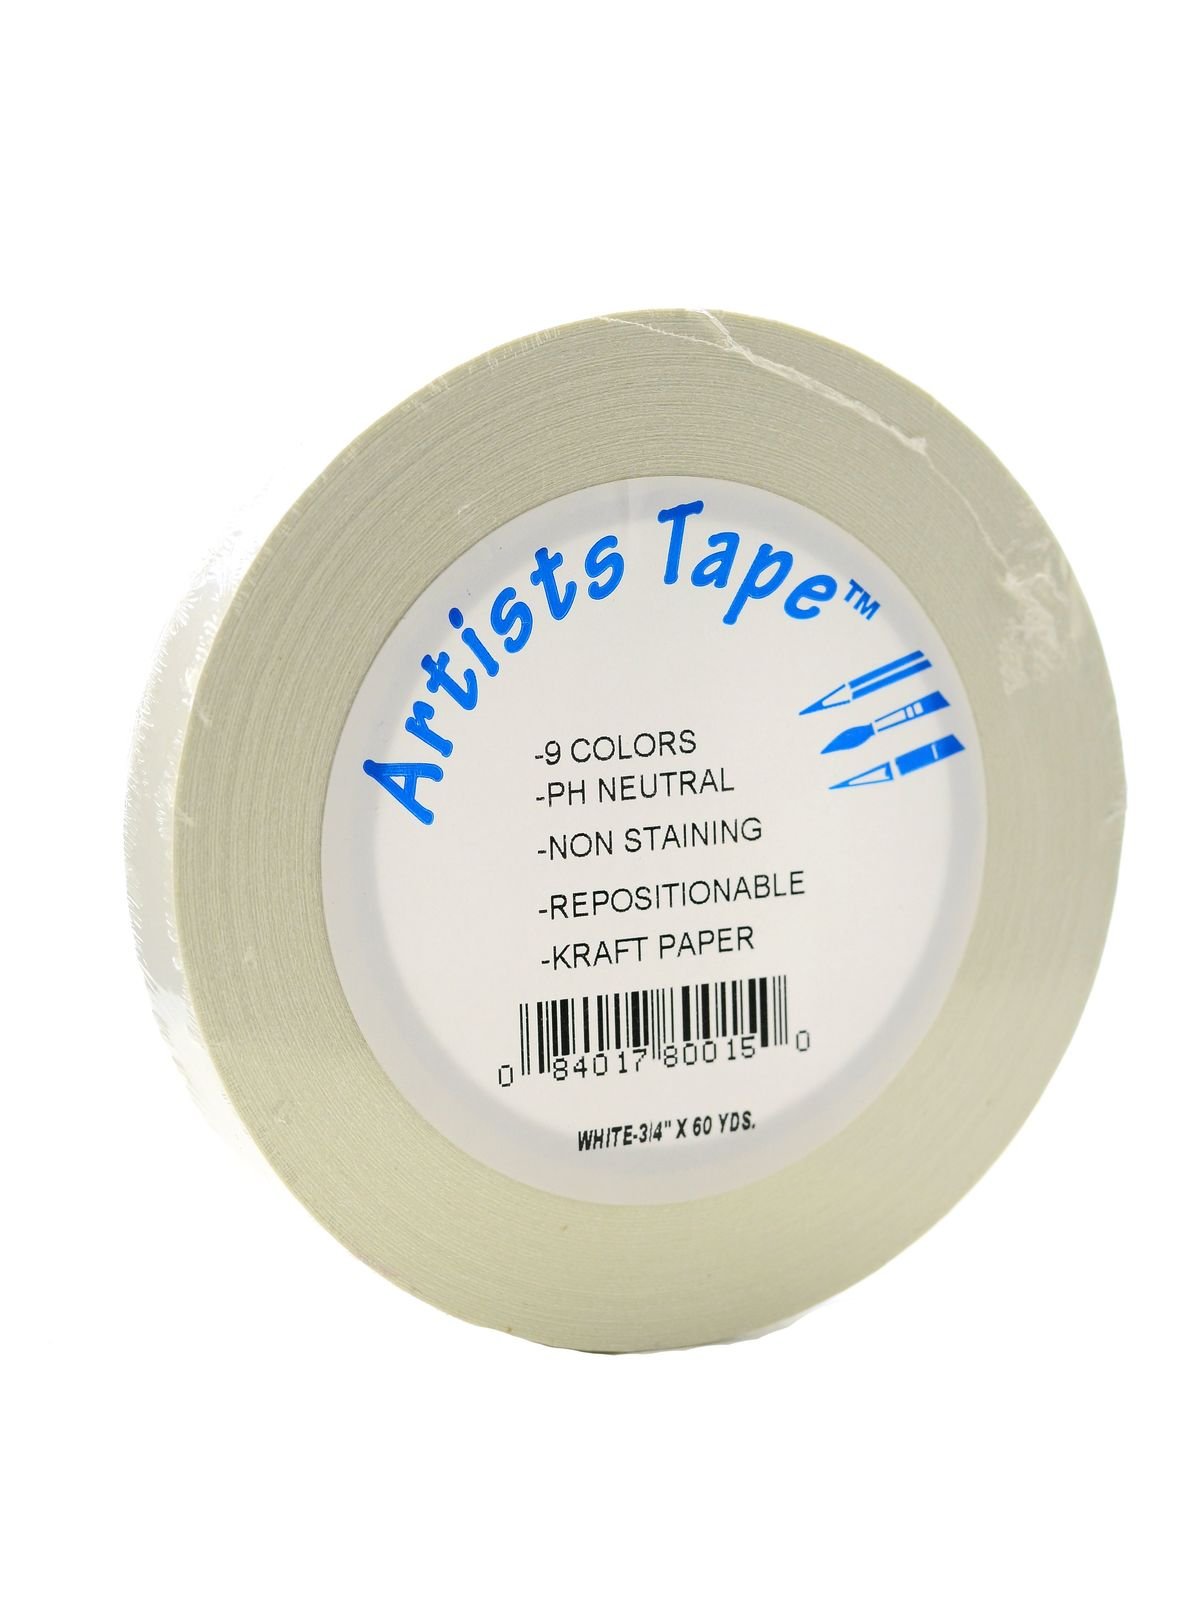 Pro® Artist Tape Premium Flatback Paper Tape